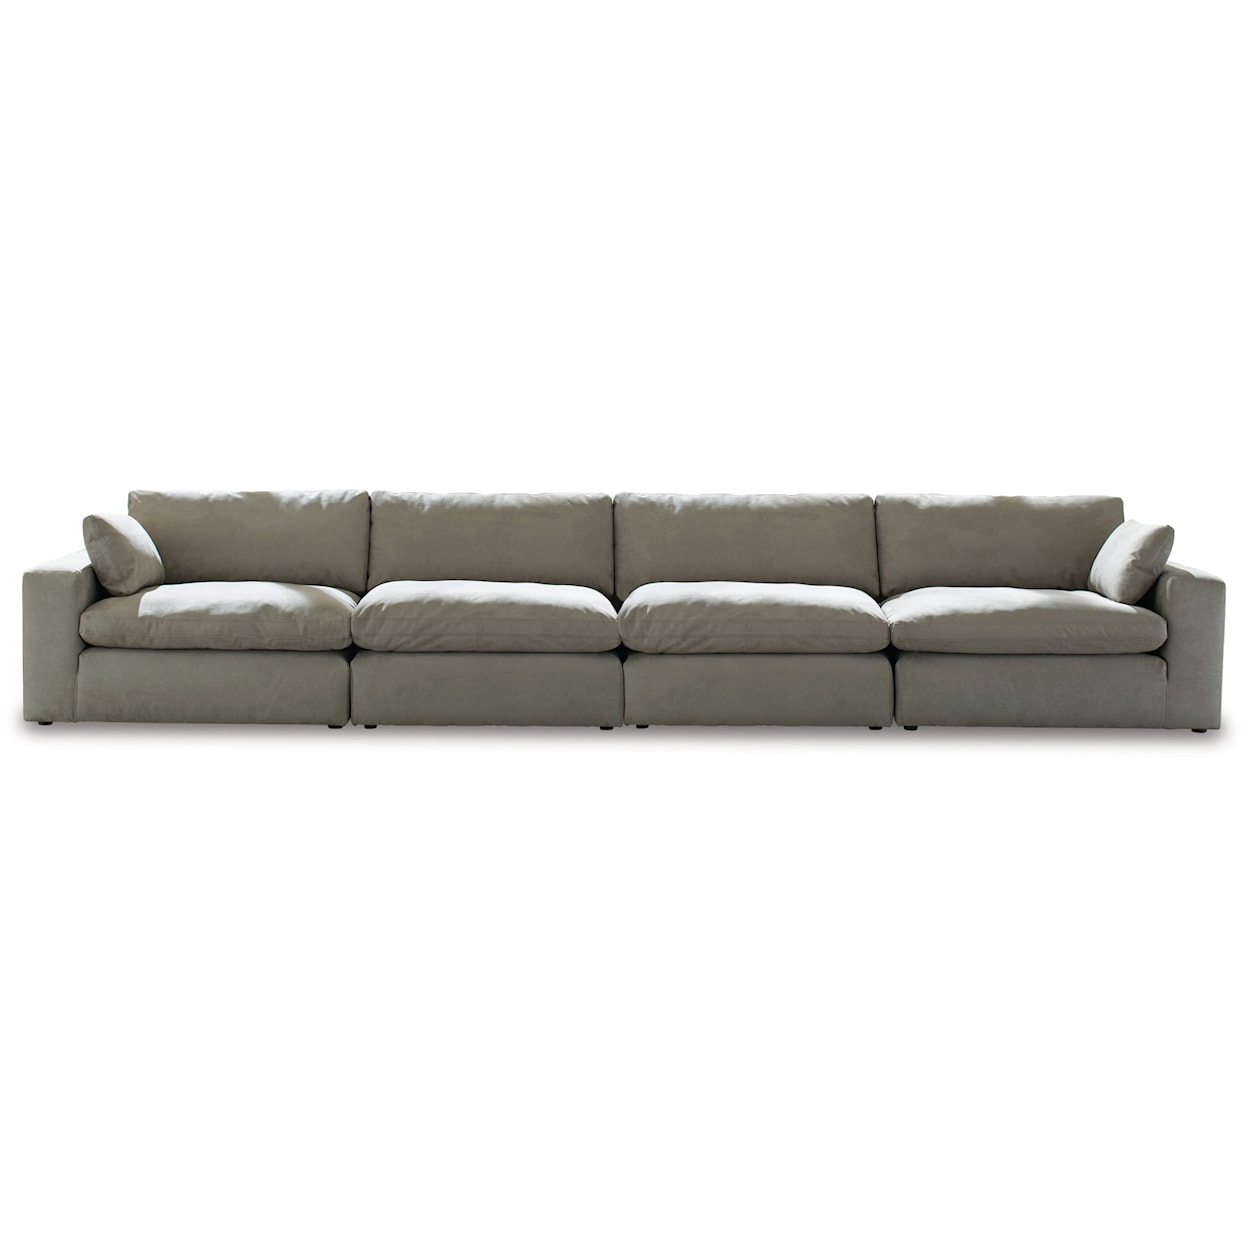 Signature Design by Ashley Furniture Next-Gen Gaucho 4-Piece Sectional Sofa